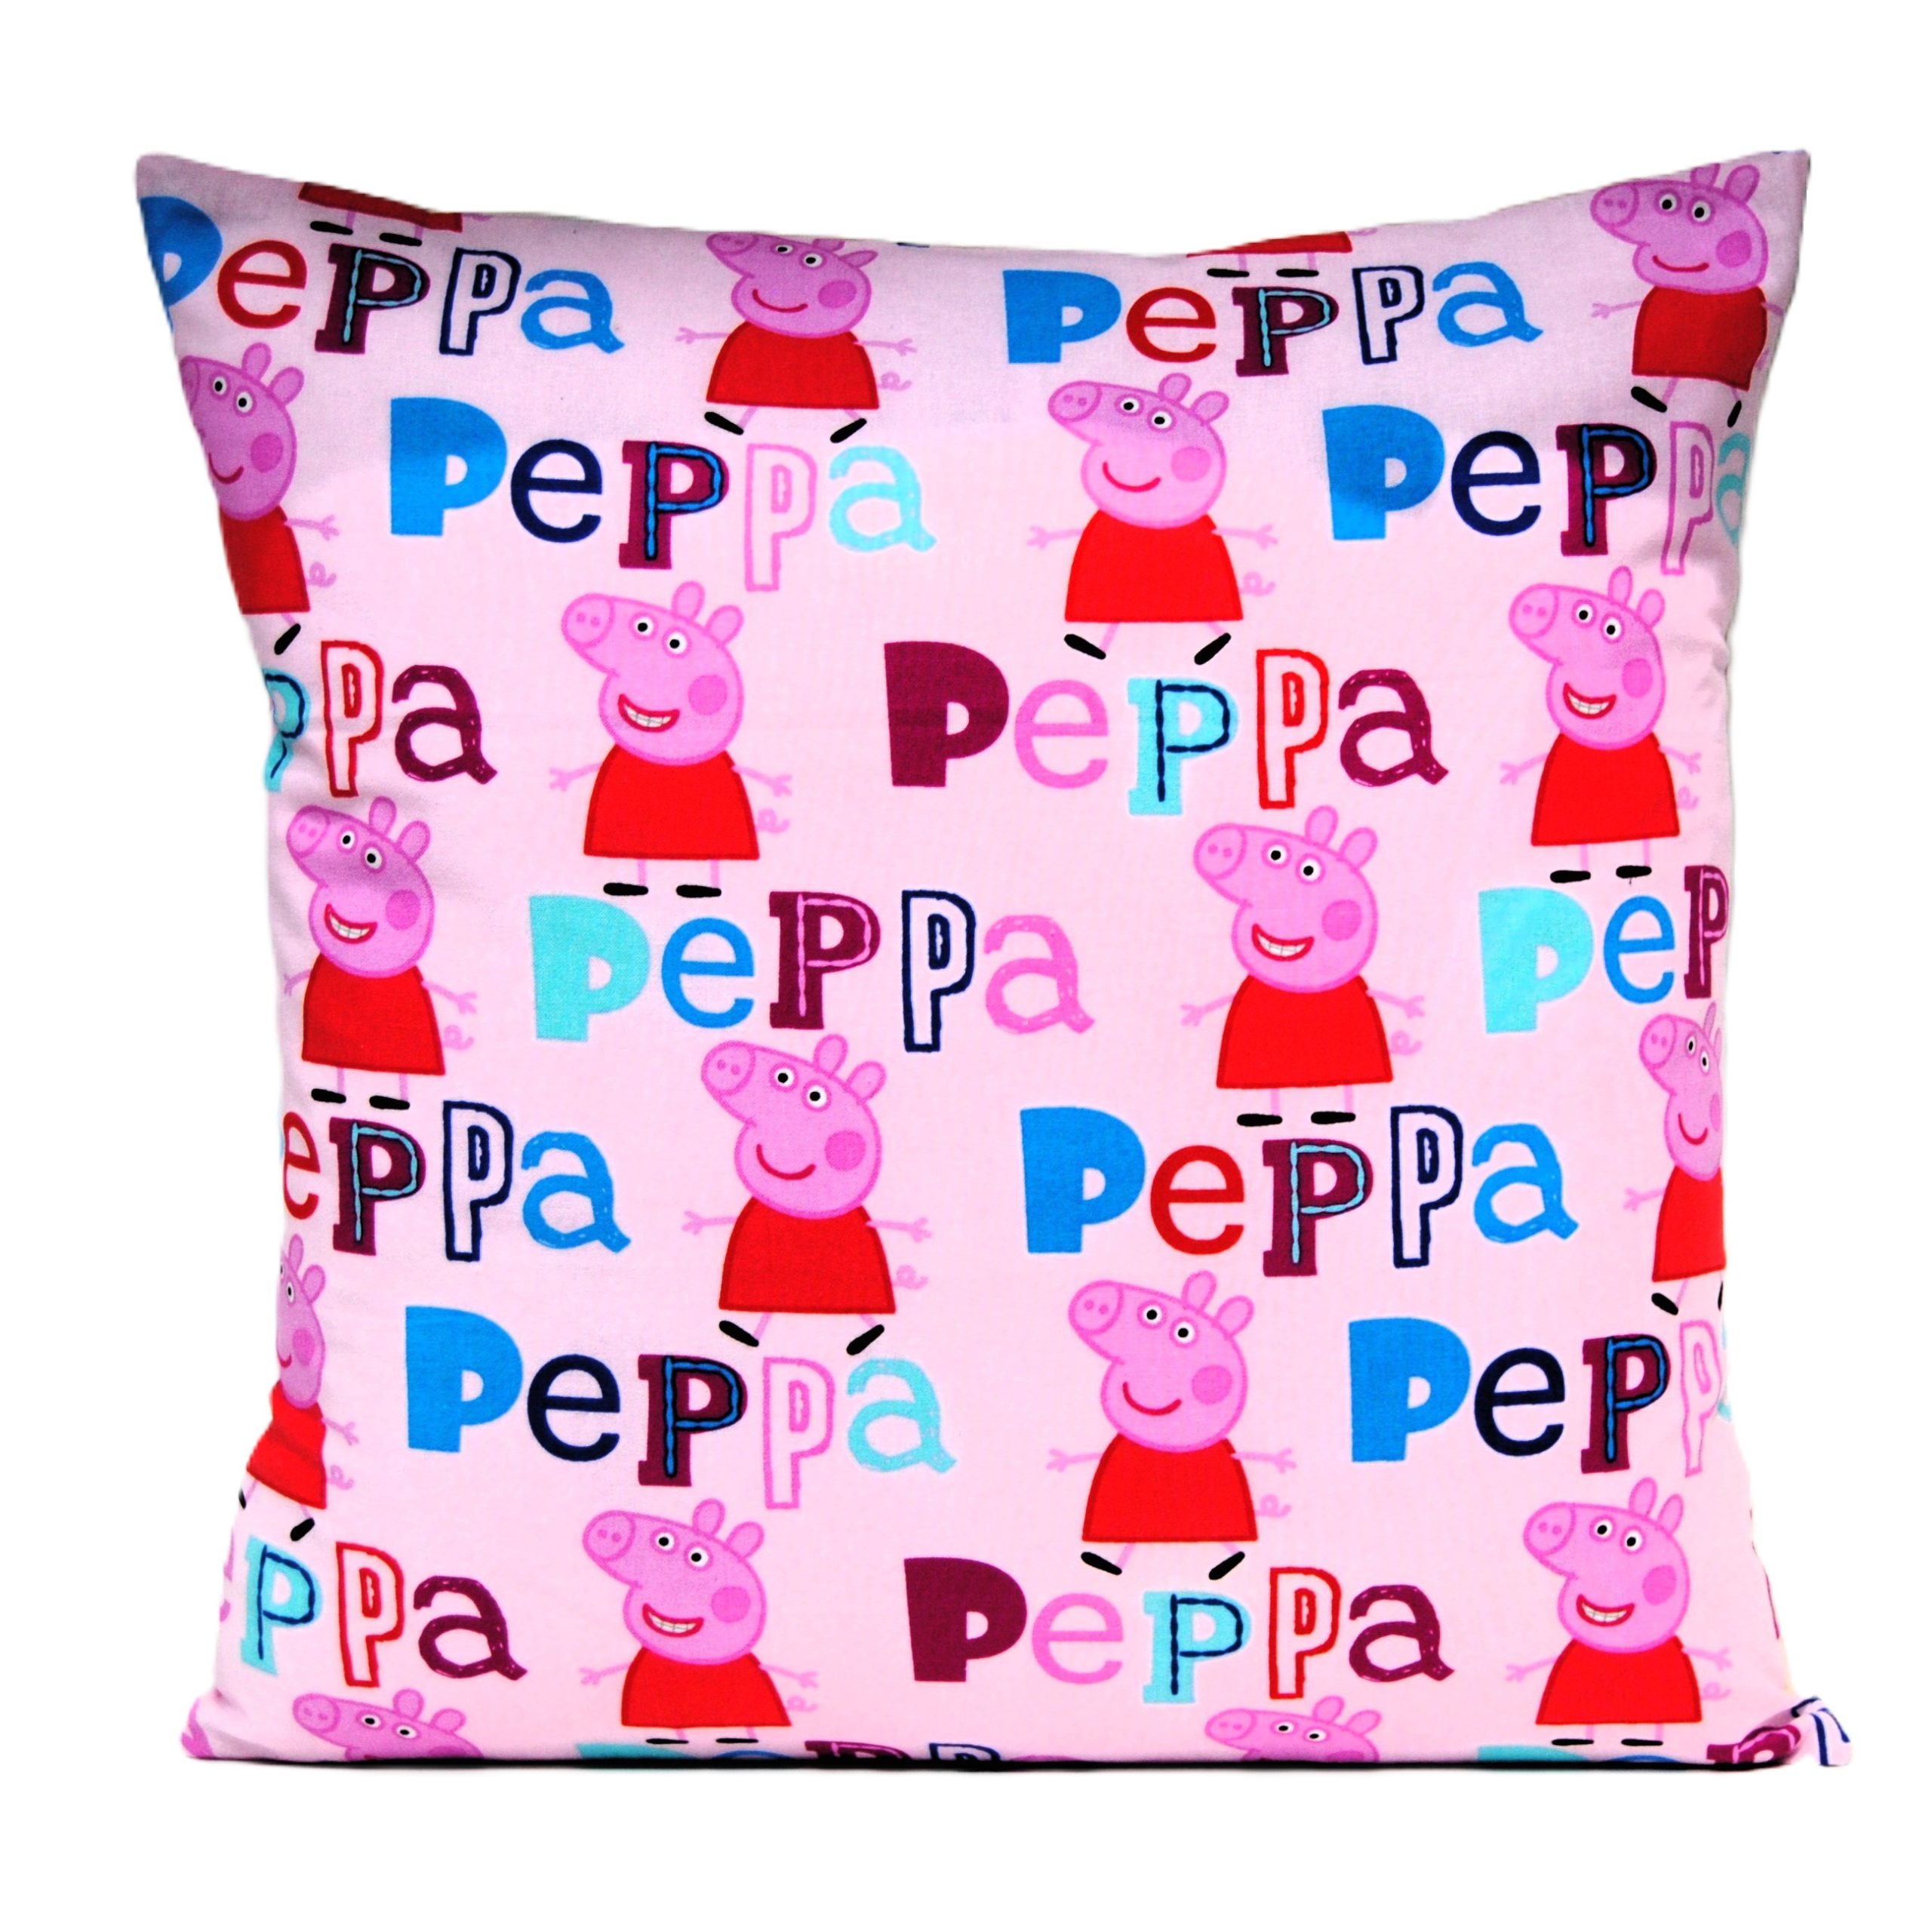 Peppa Pig Cushion.